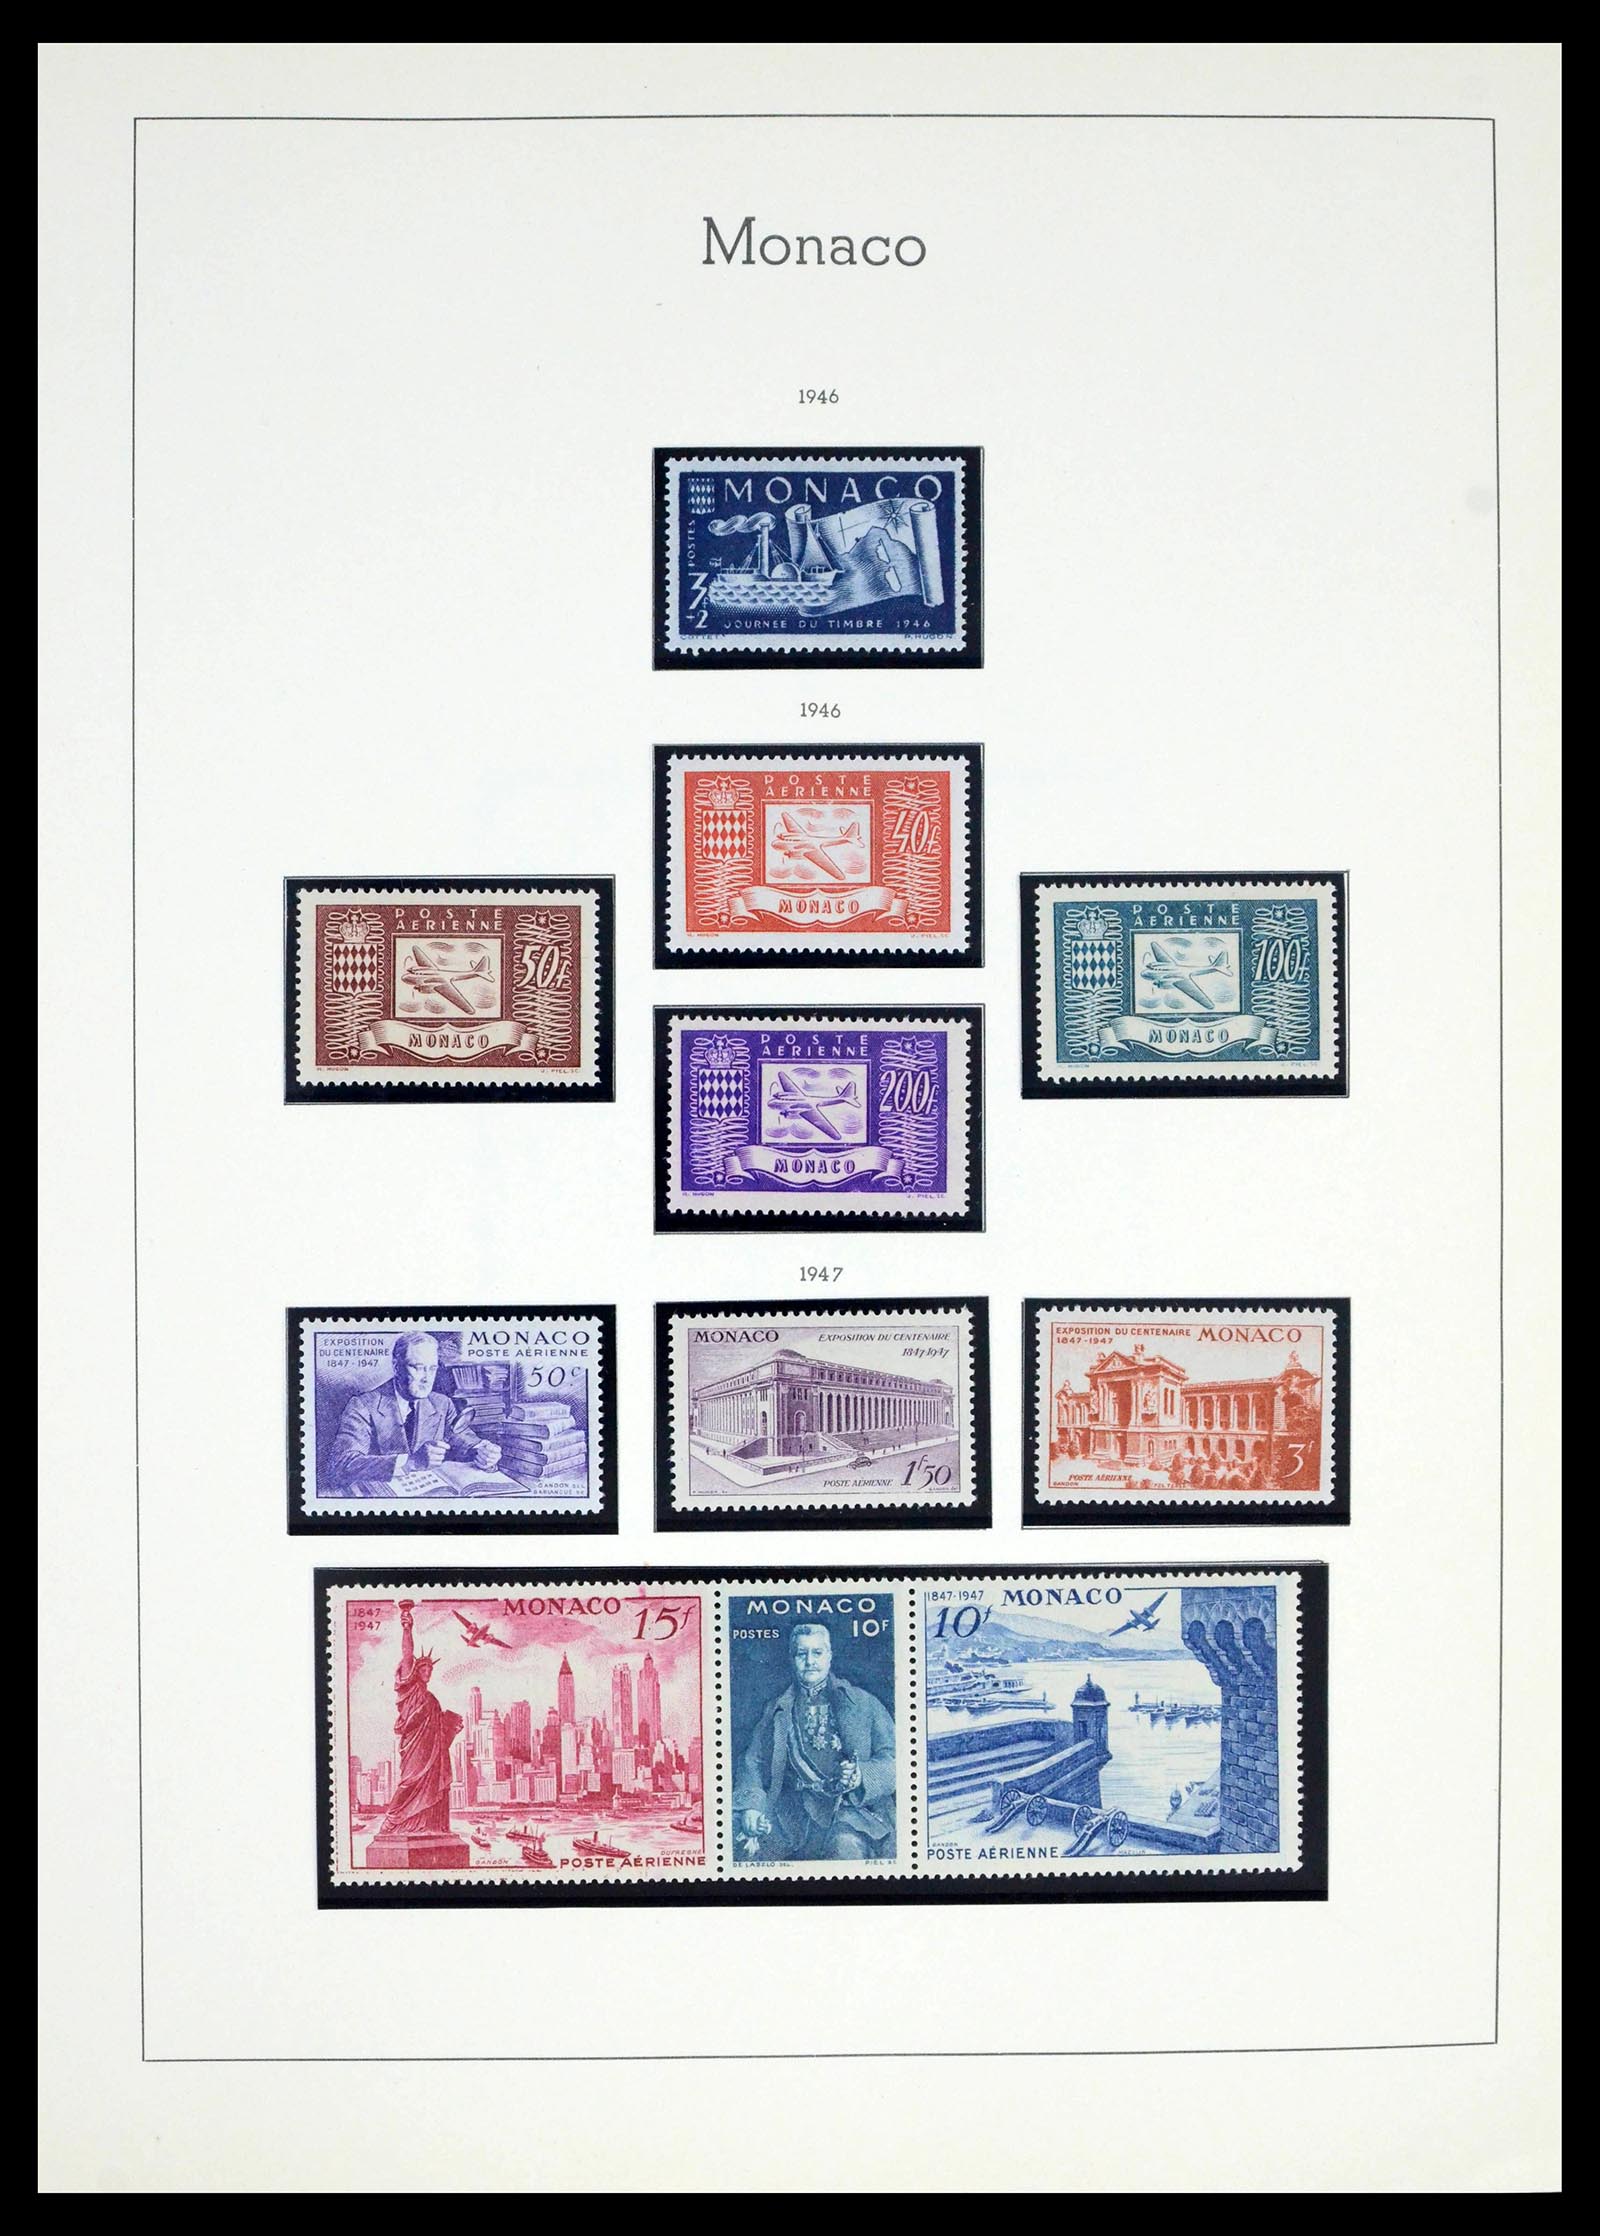 39392 0027 - Stamp collection 39392 Monaco 1885-1999.